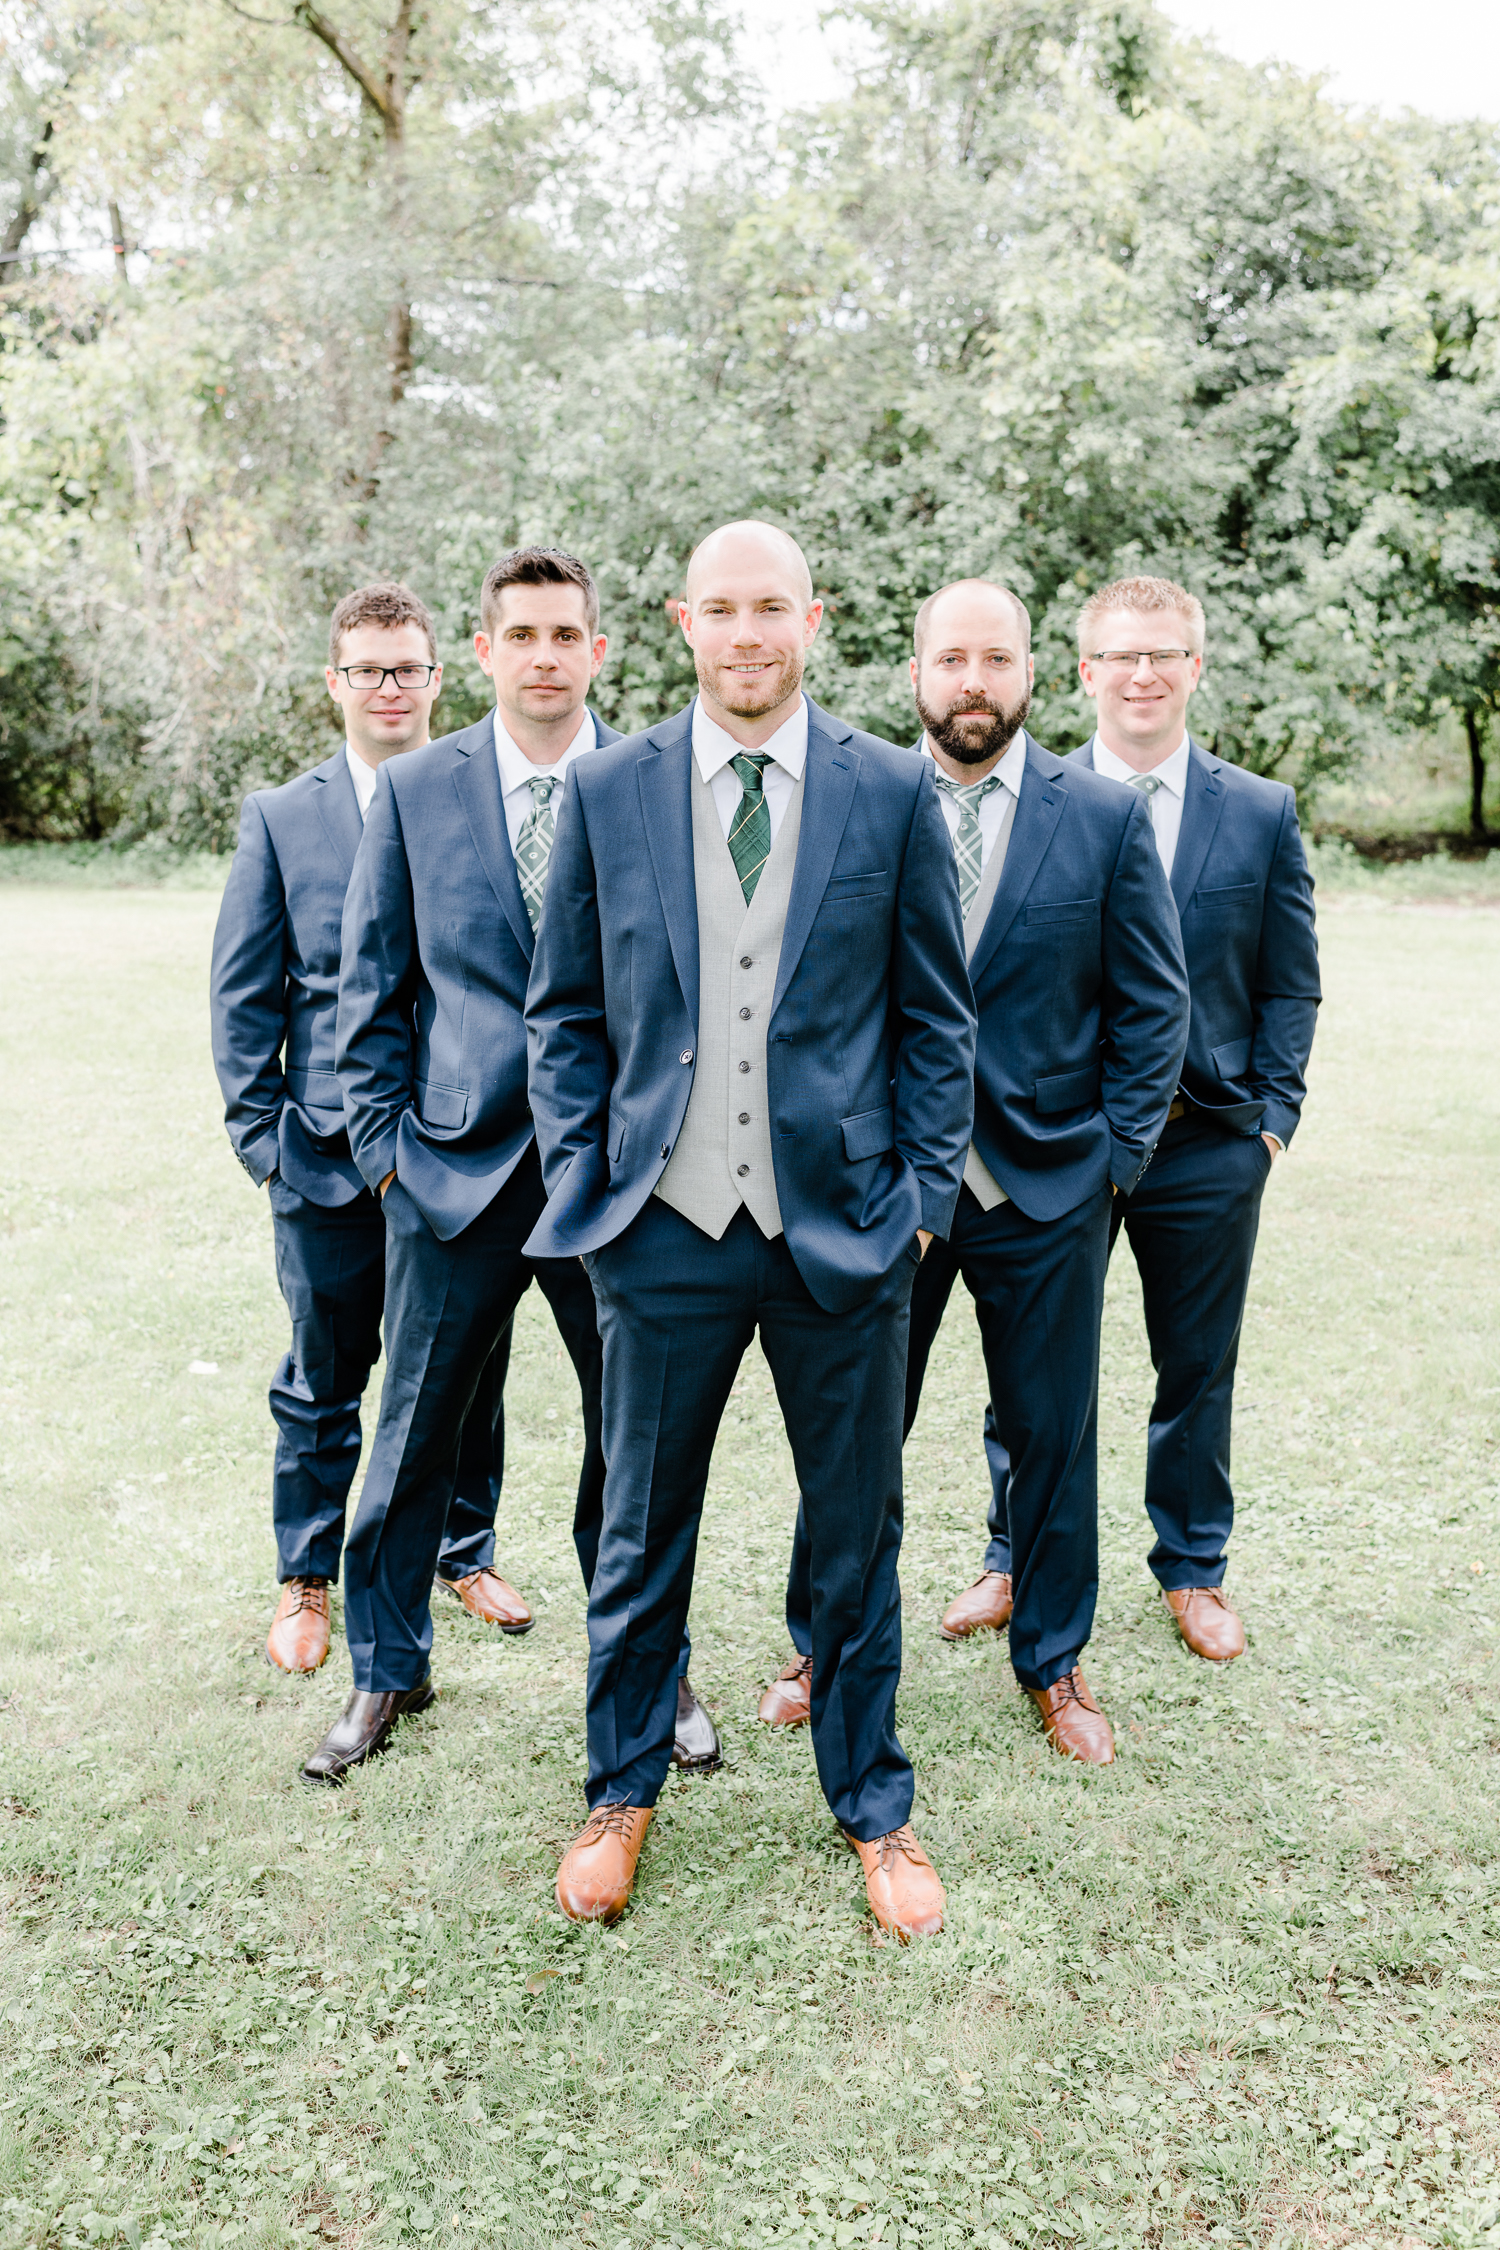 Groom with groomsmen in blue suits